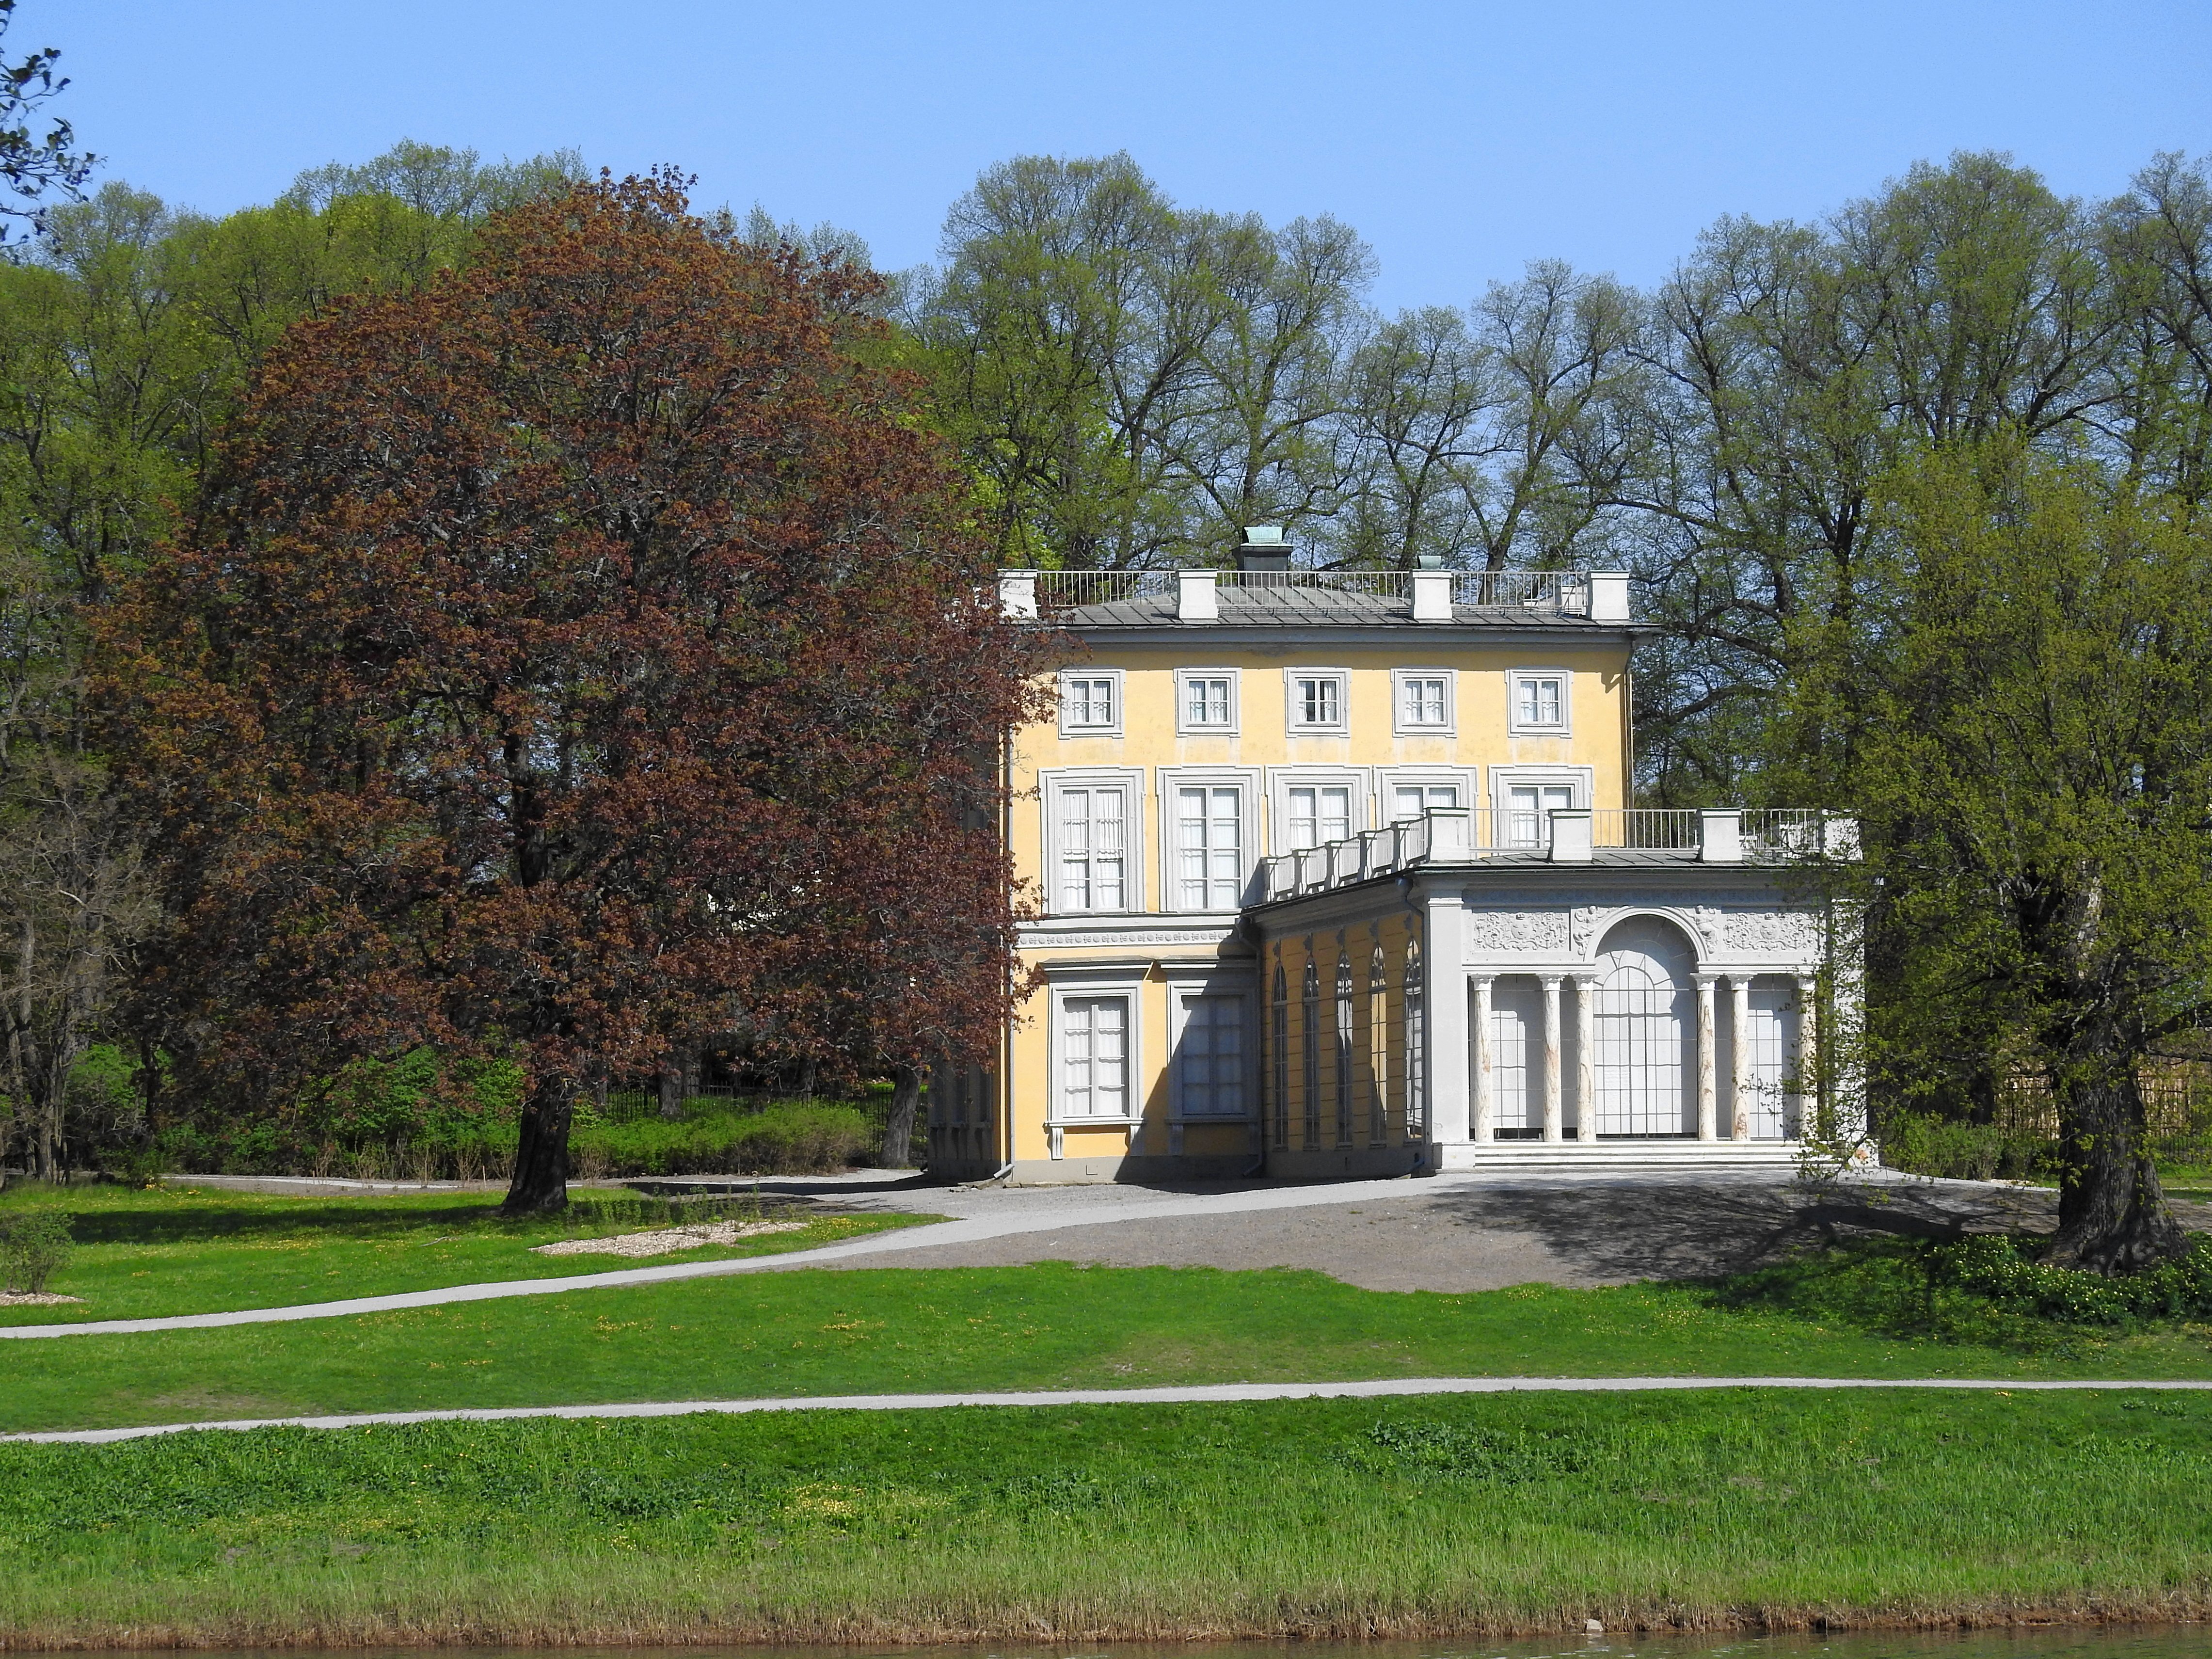 Gustav IIIs paviljong